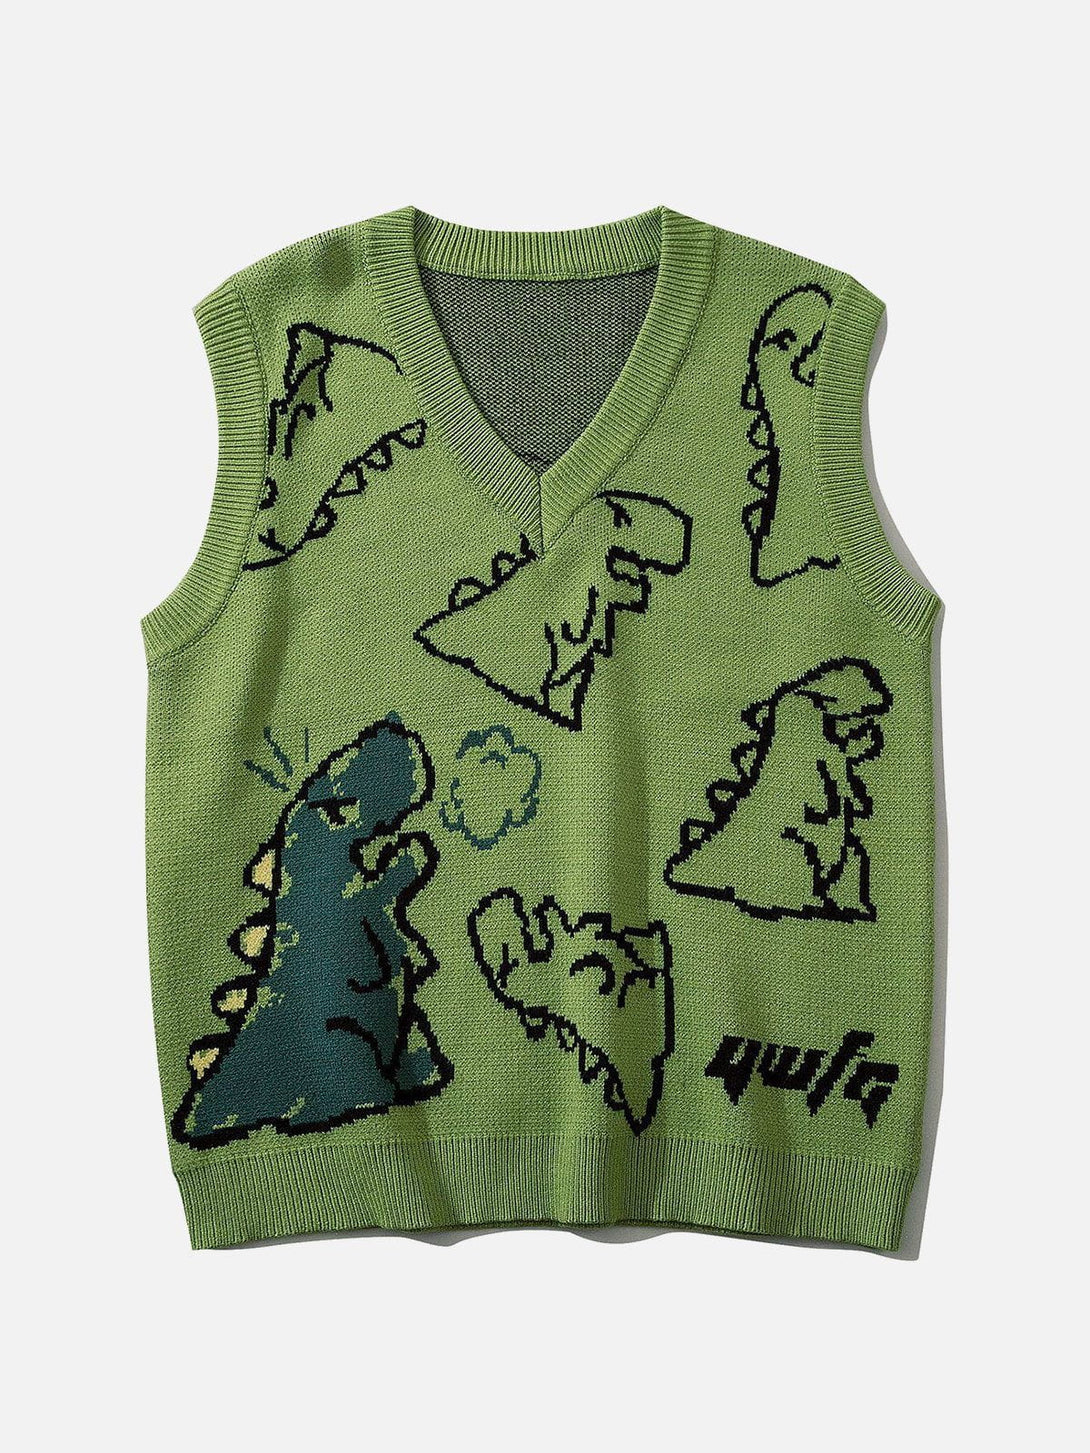 Majesda® - Little Dinosaur Graphic Sweater Vest outfit ideas streetwear fashion